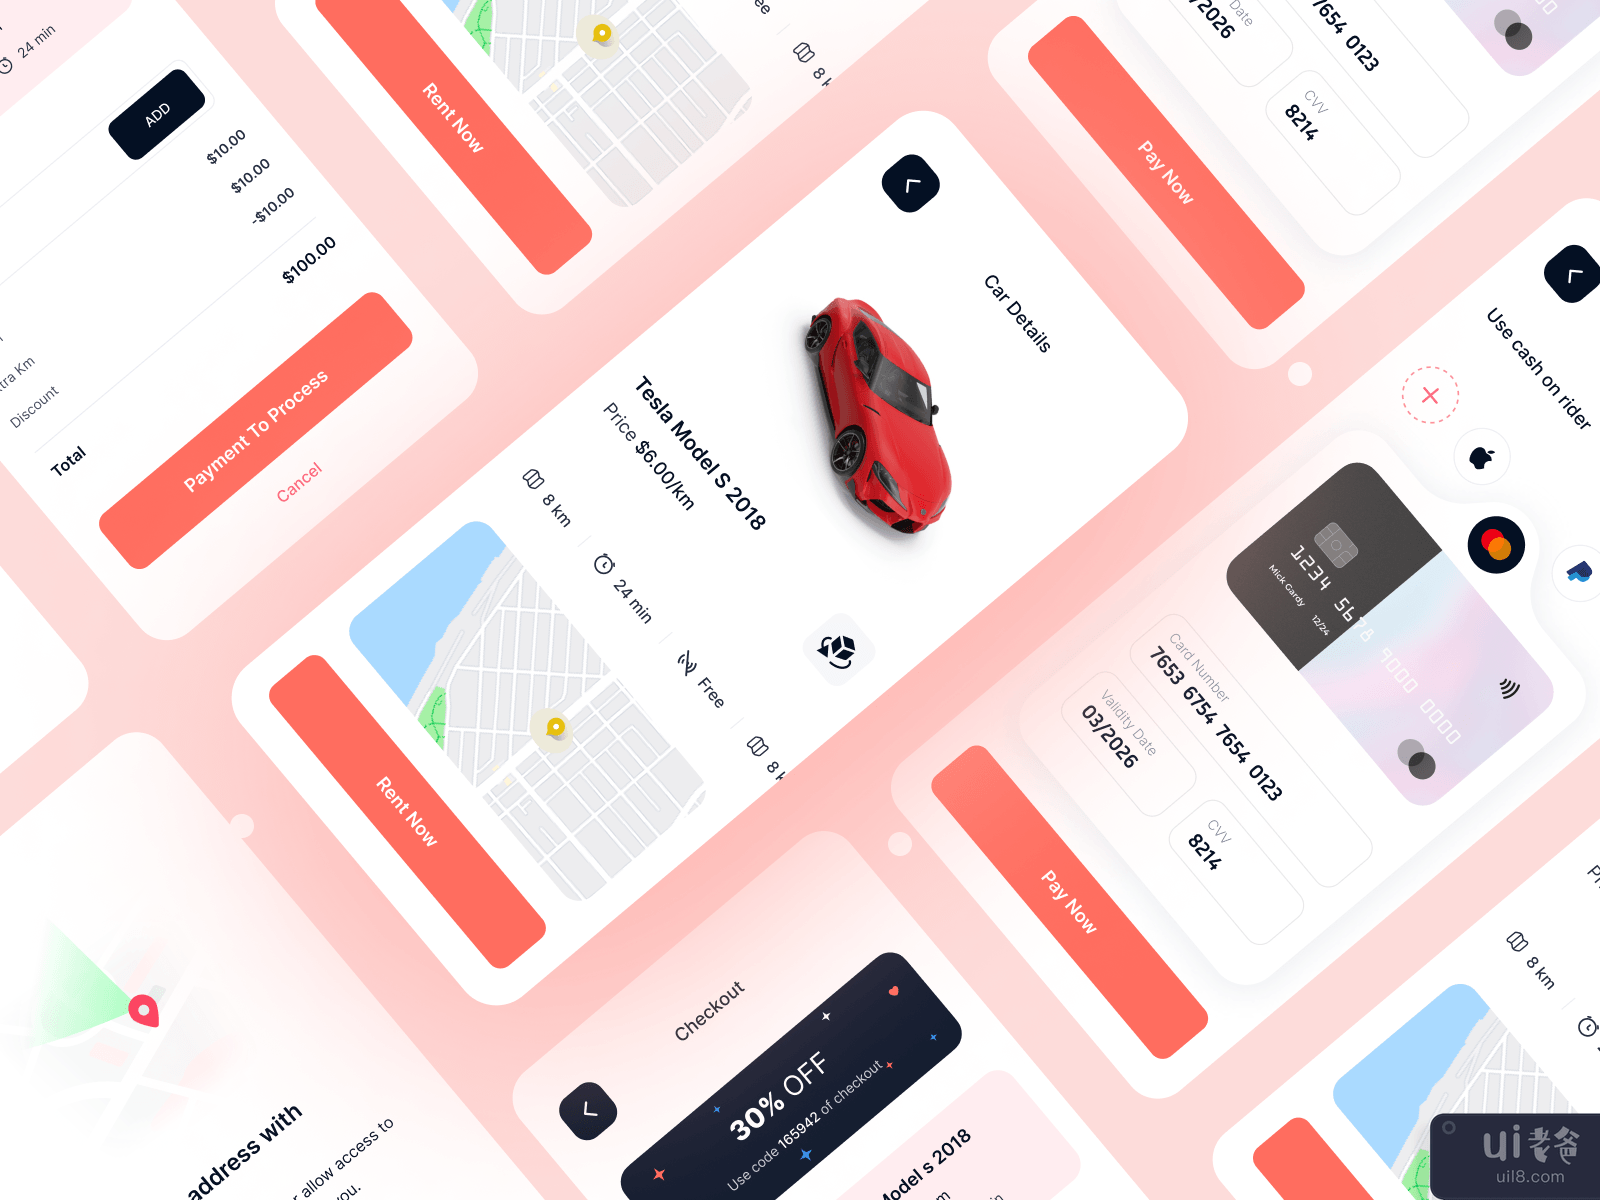 Ride Sharing Mobile App